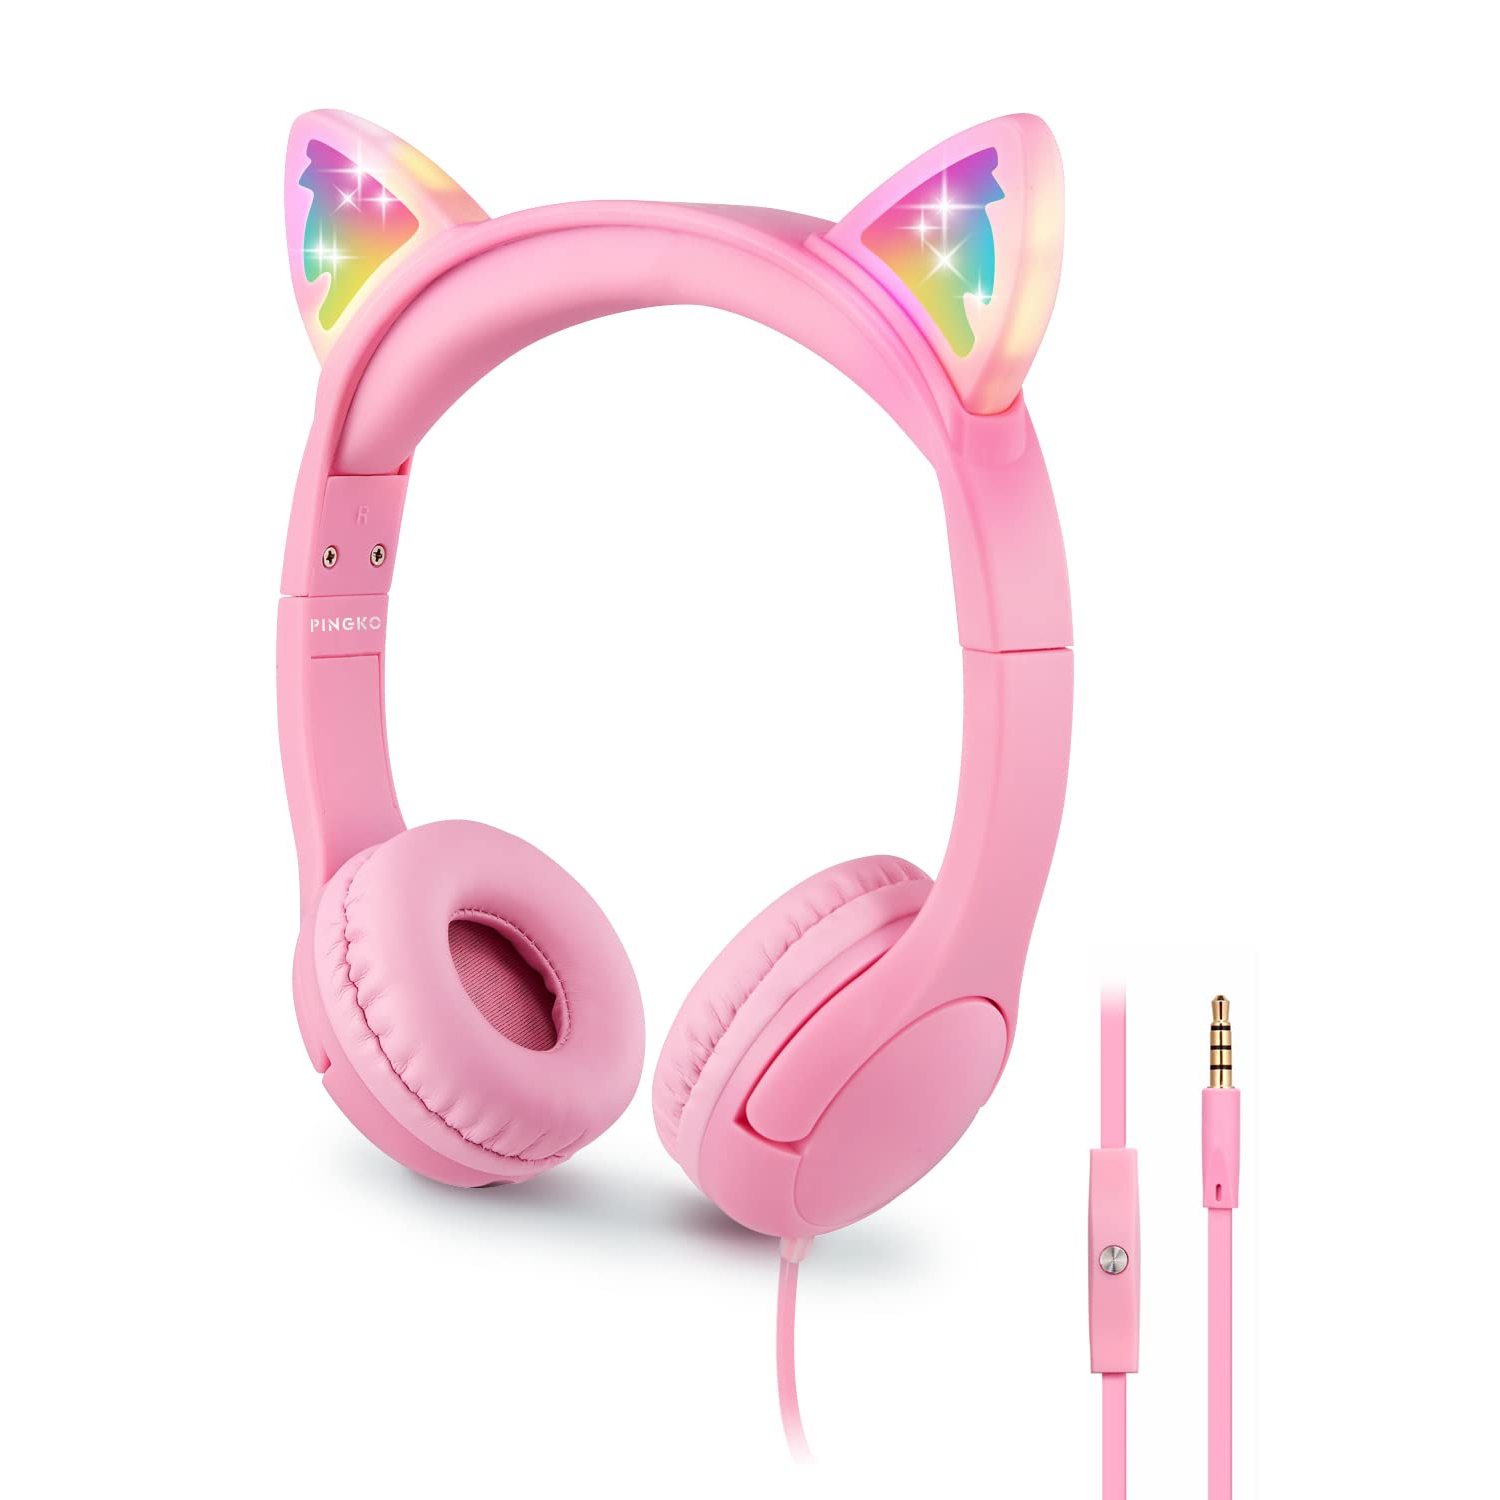 PINGKO Kids Headphones: Toddler Headphones with Microphone - Cat Ear Headphones for Girls Boys, LED Light 3.5mm Jack, 85db V